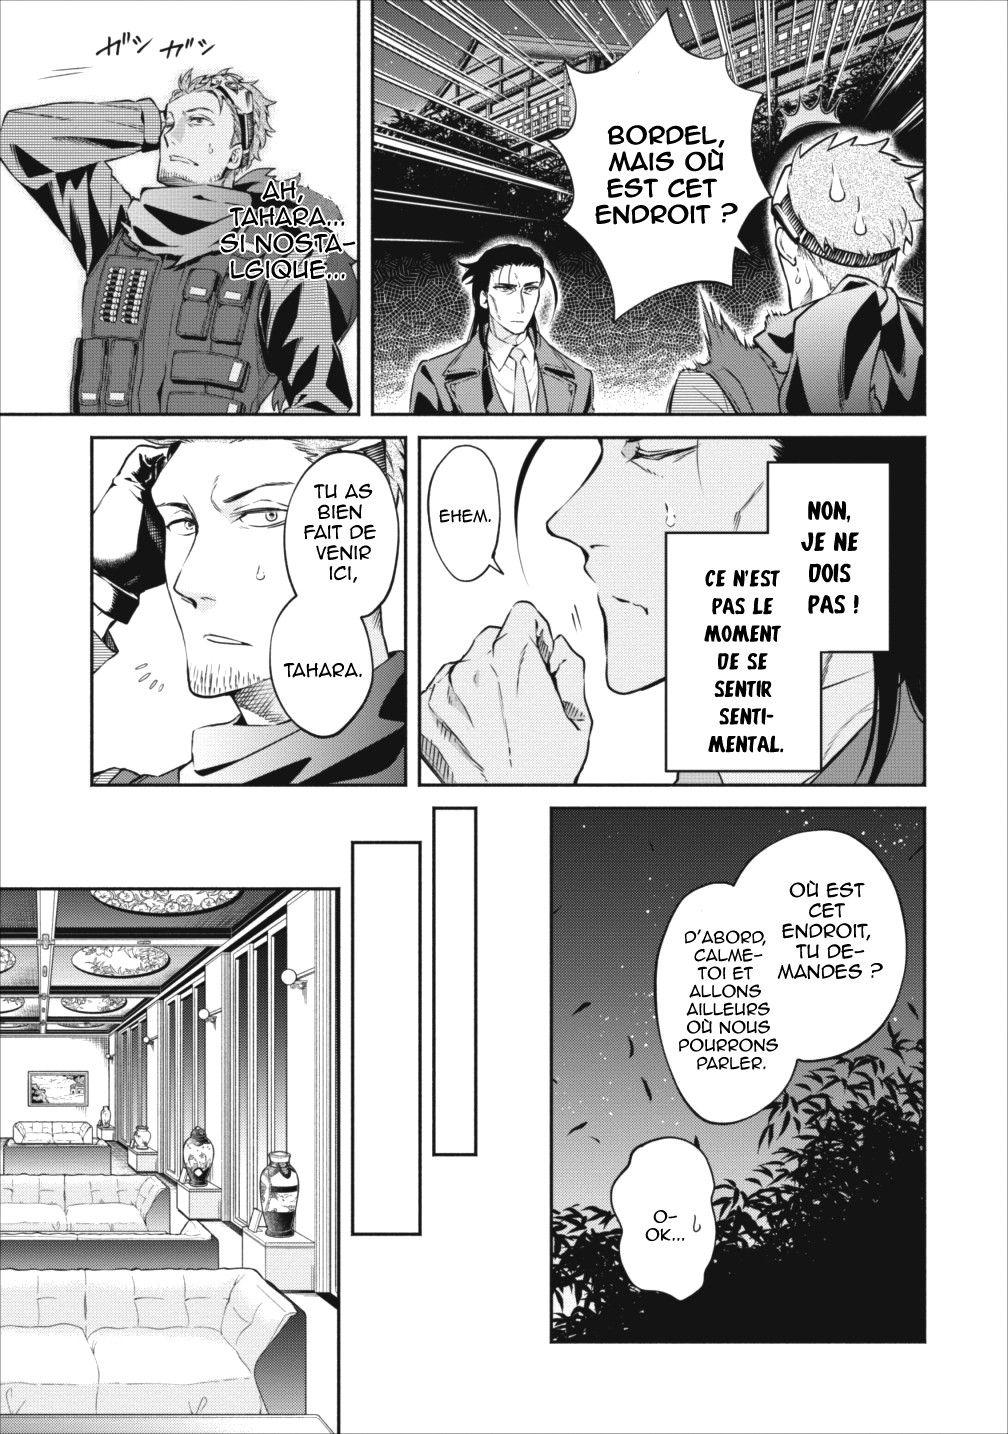 Maou-sama Retry ! (Manga) en VF